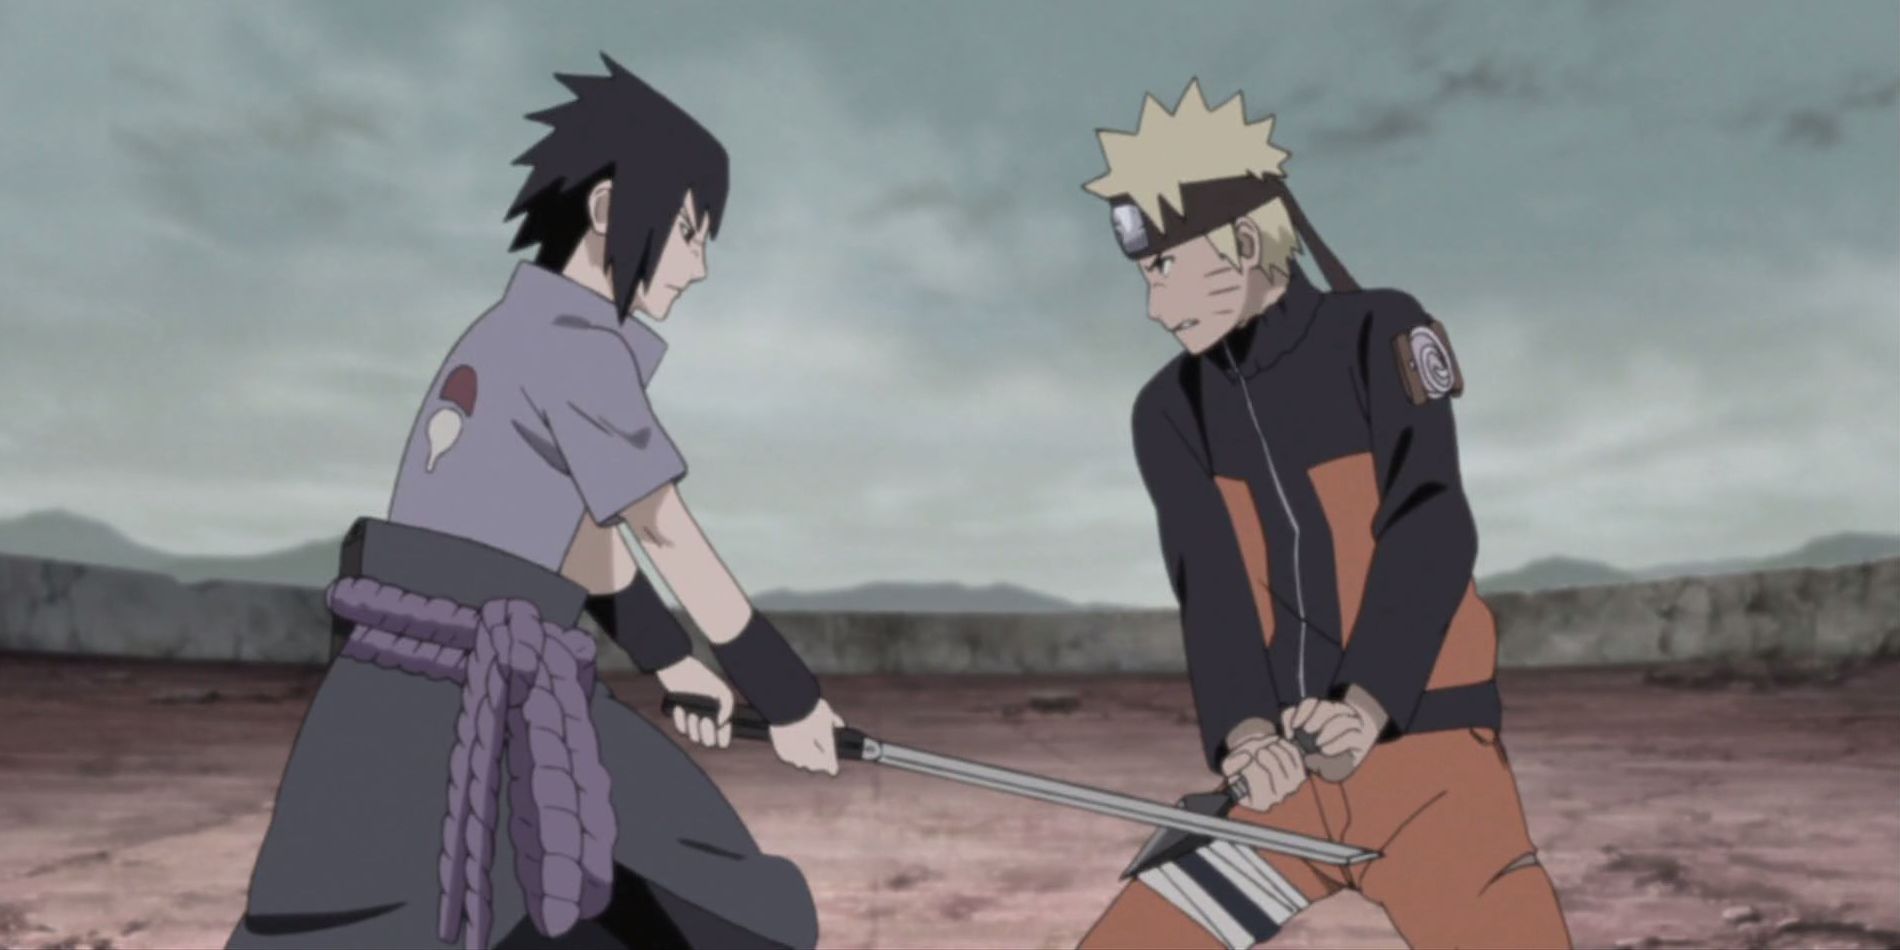 Naruto and Sasuke fight